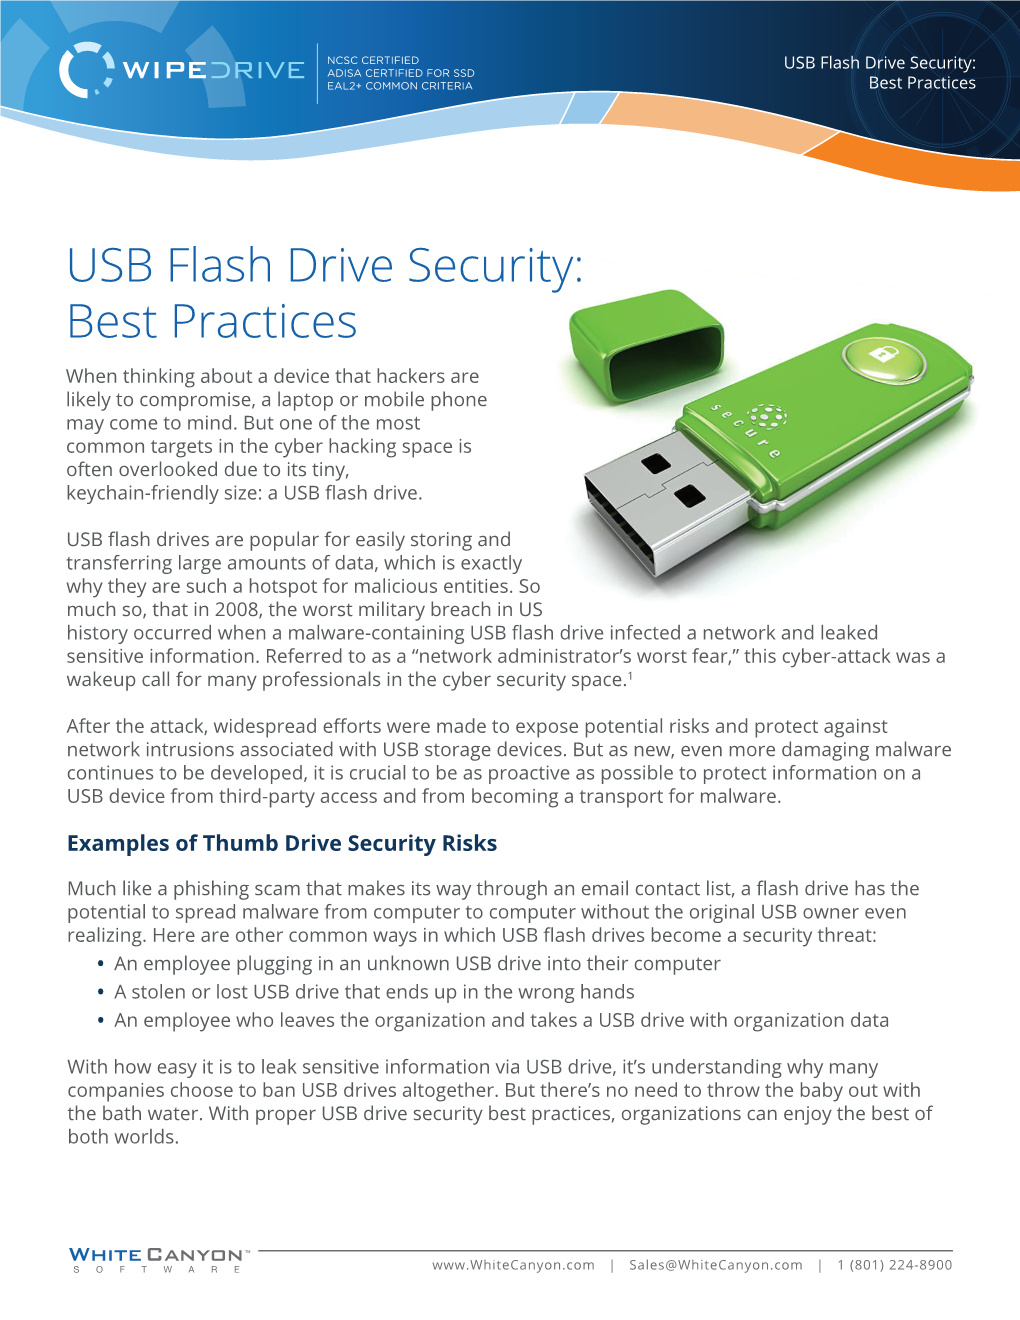 USB Flash Drive Security: Best Practices